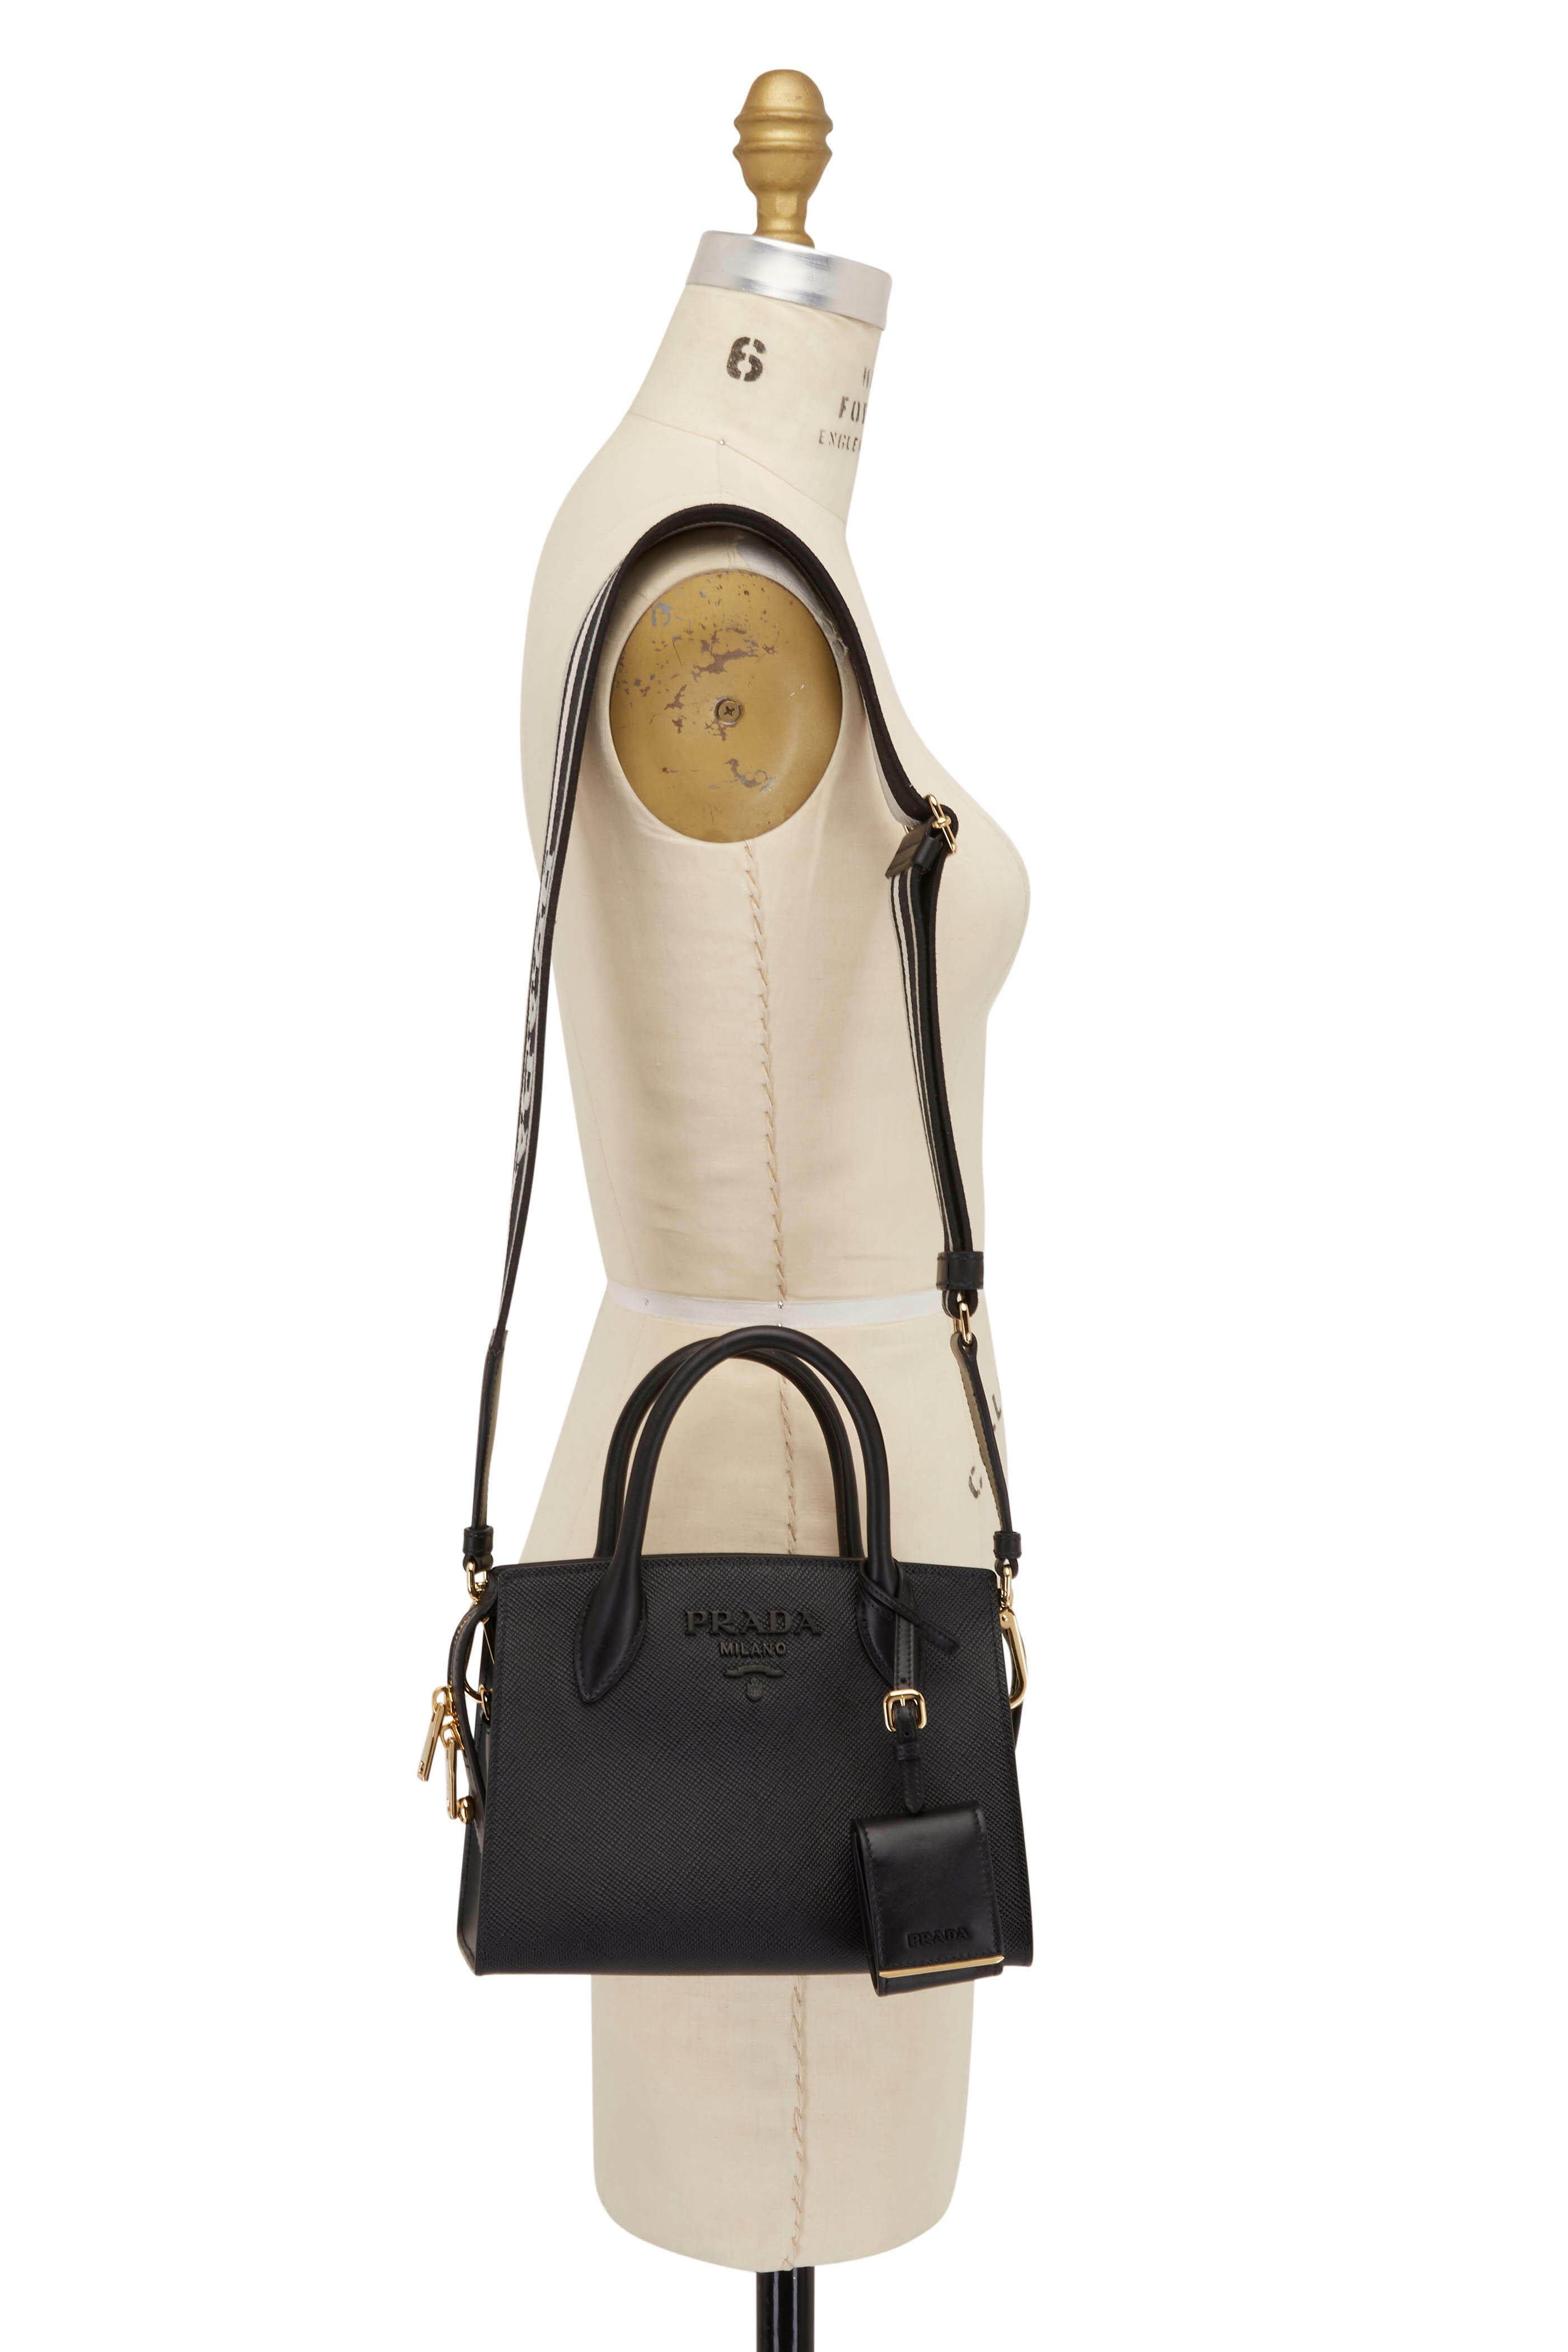 Prada Galleria Mini Leather Top-handle Bag in Black